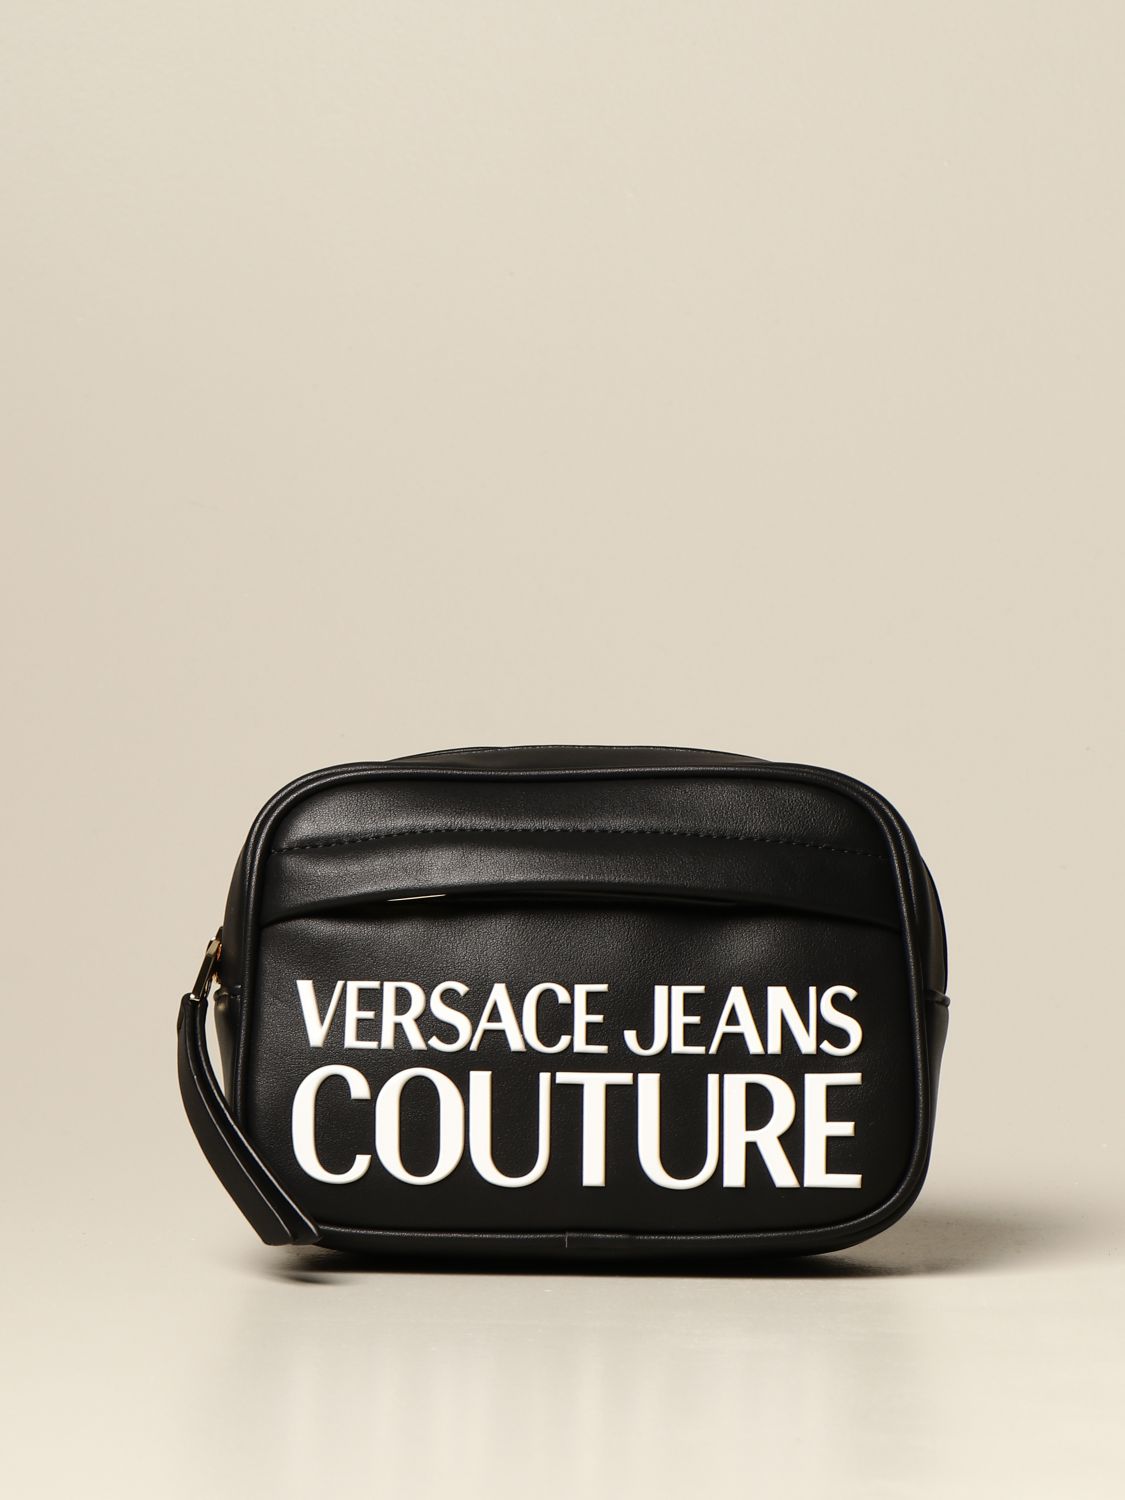 versace jeans couture belt bag